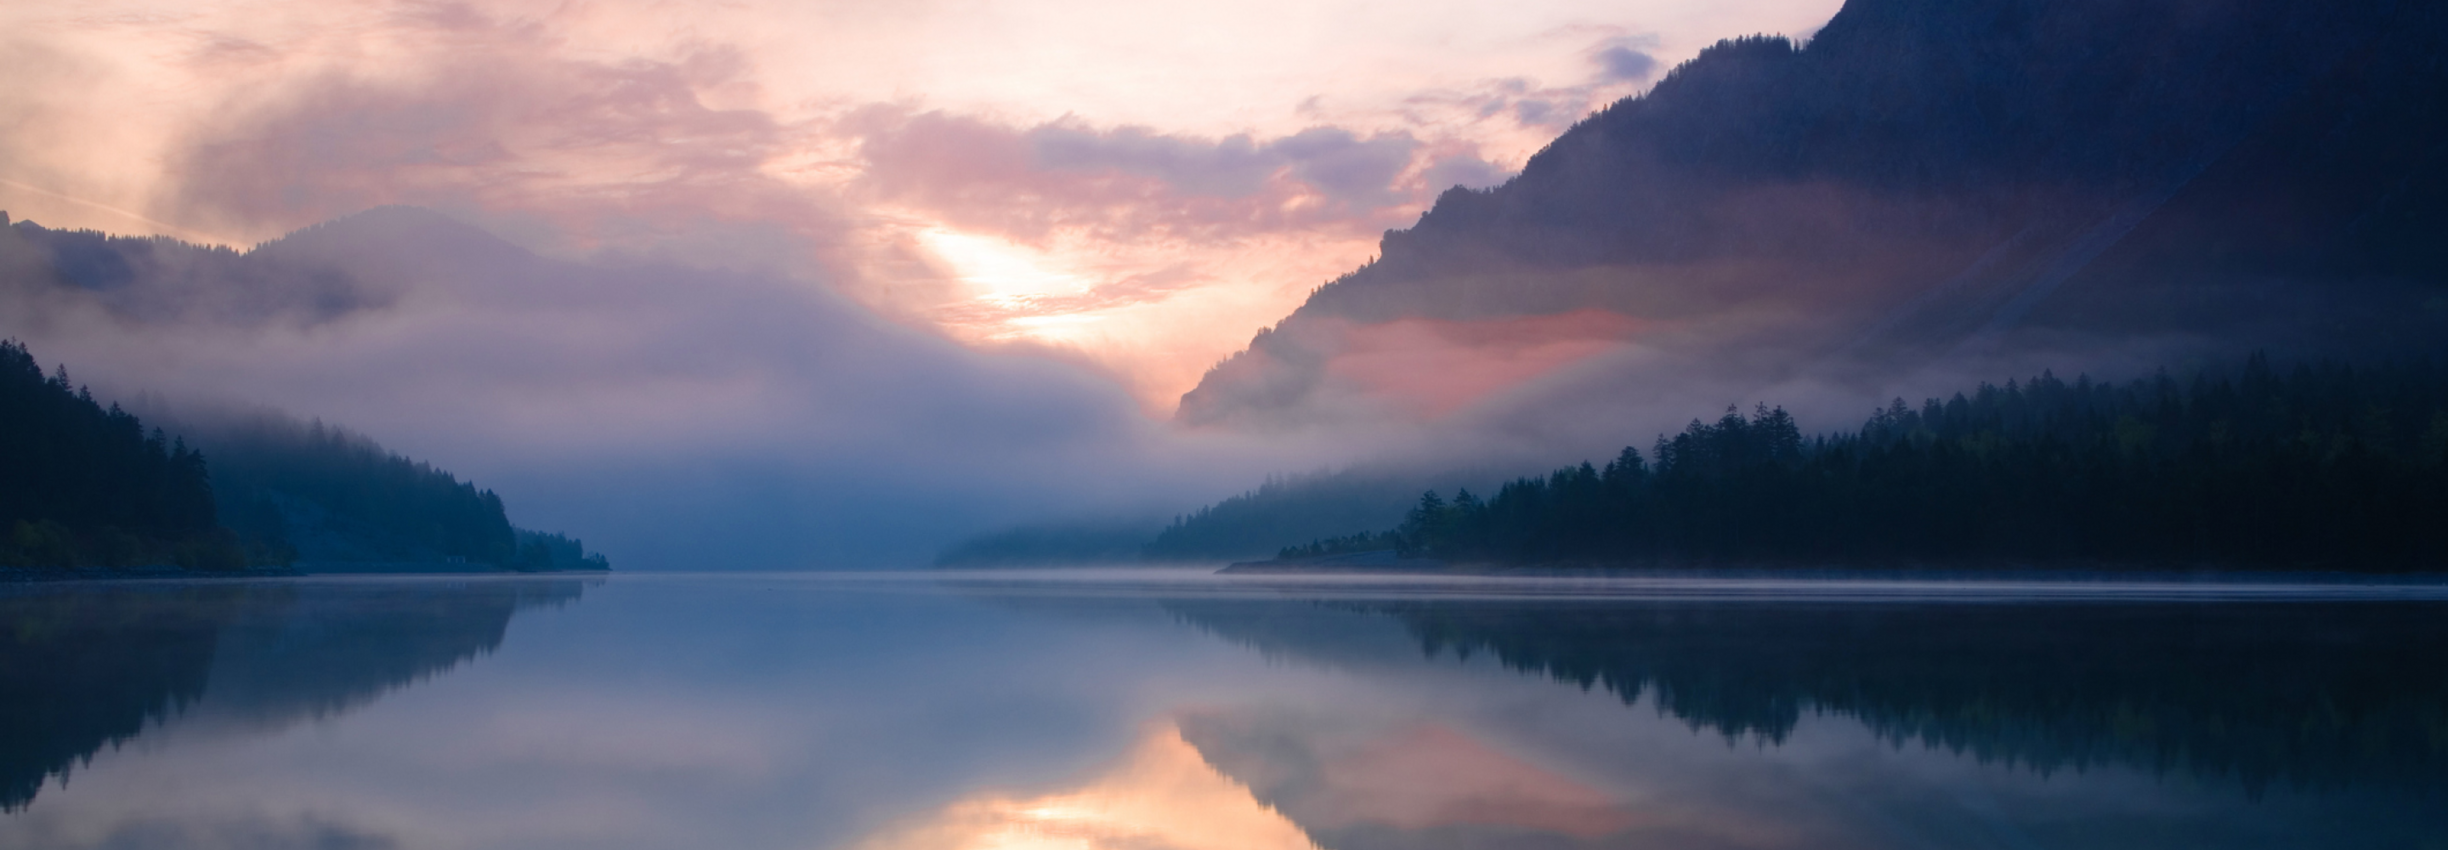 Misty sunrise over a mountain lake